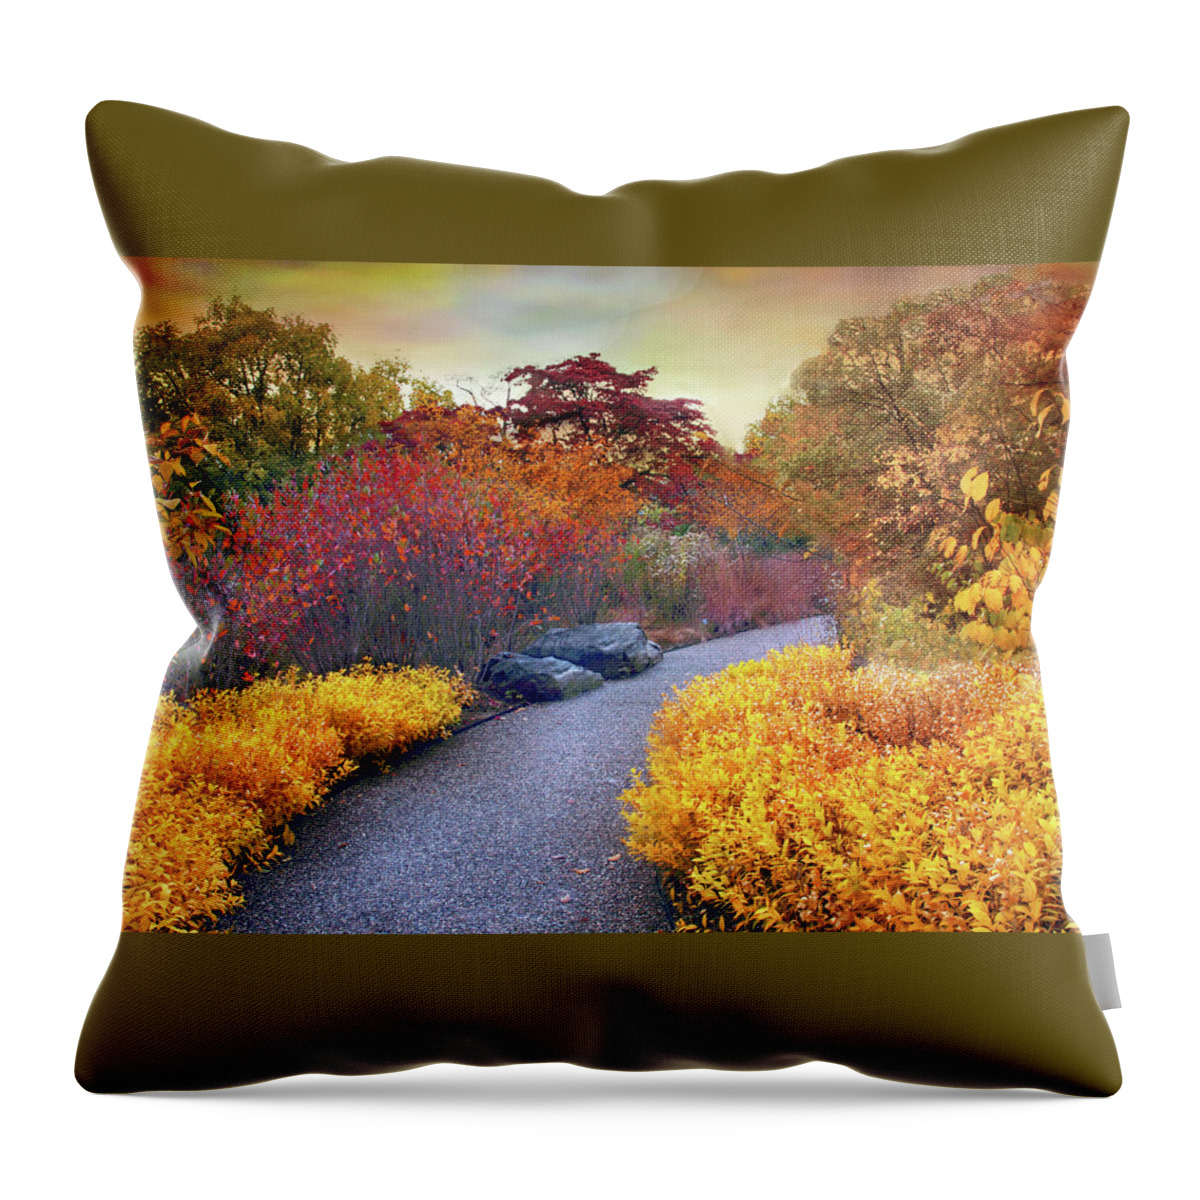 Autumn Throw Pillow featuring the photograph Native Garden Splendor by Jessica Jenney